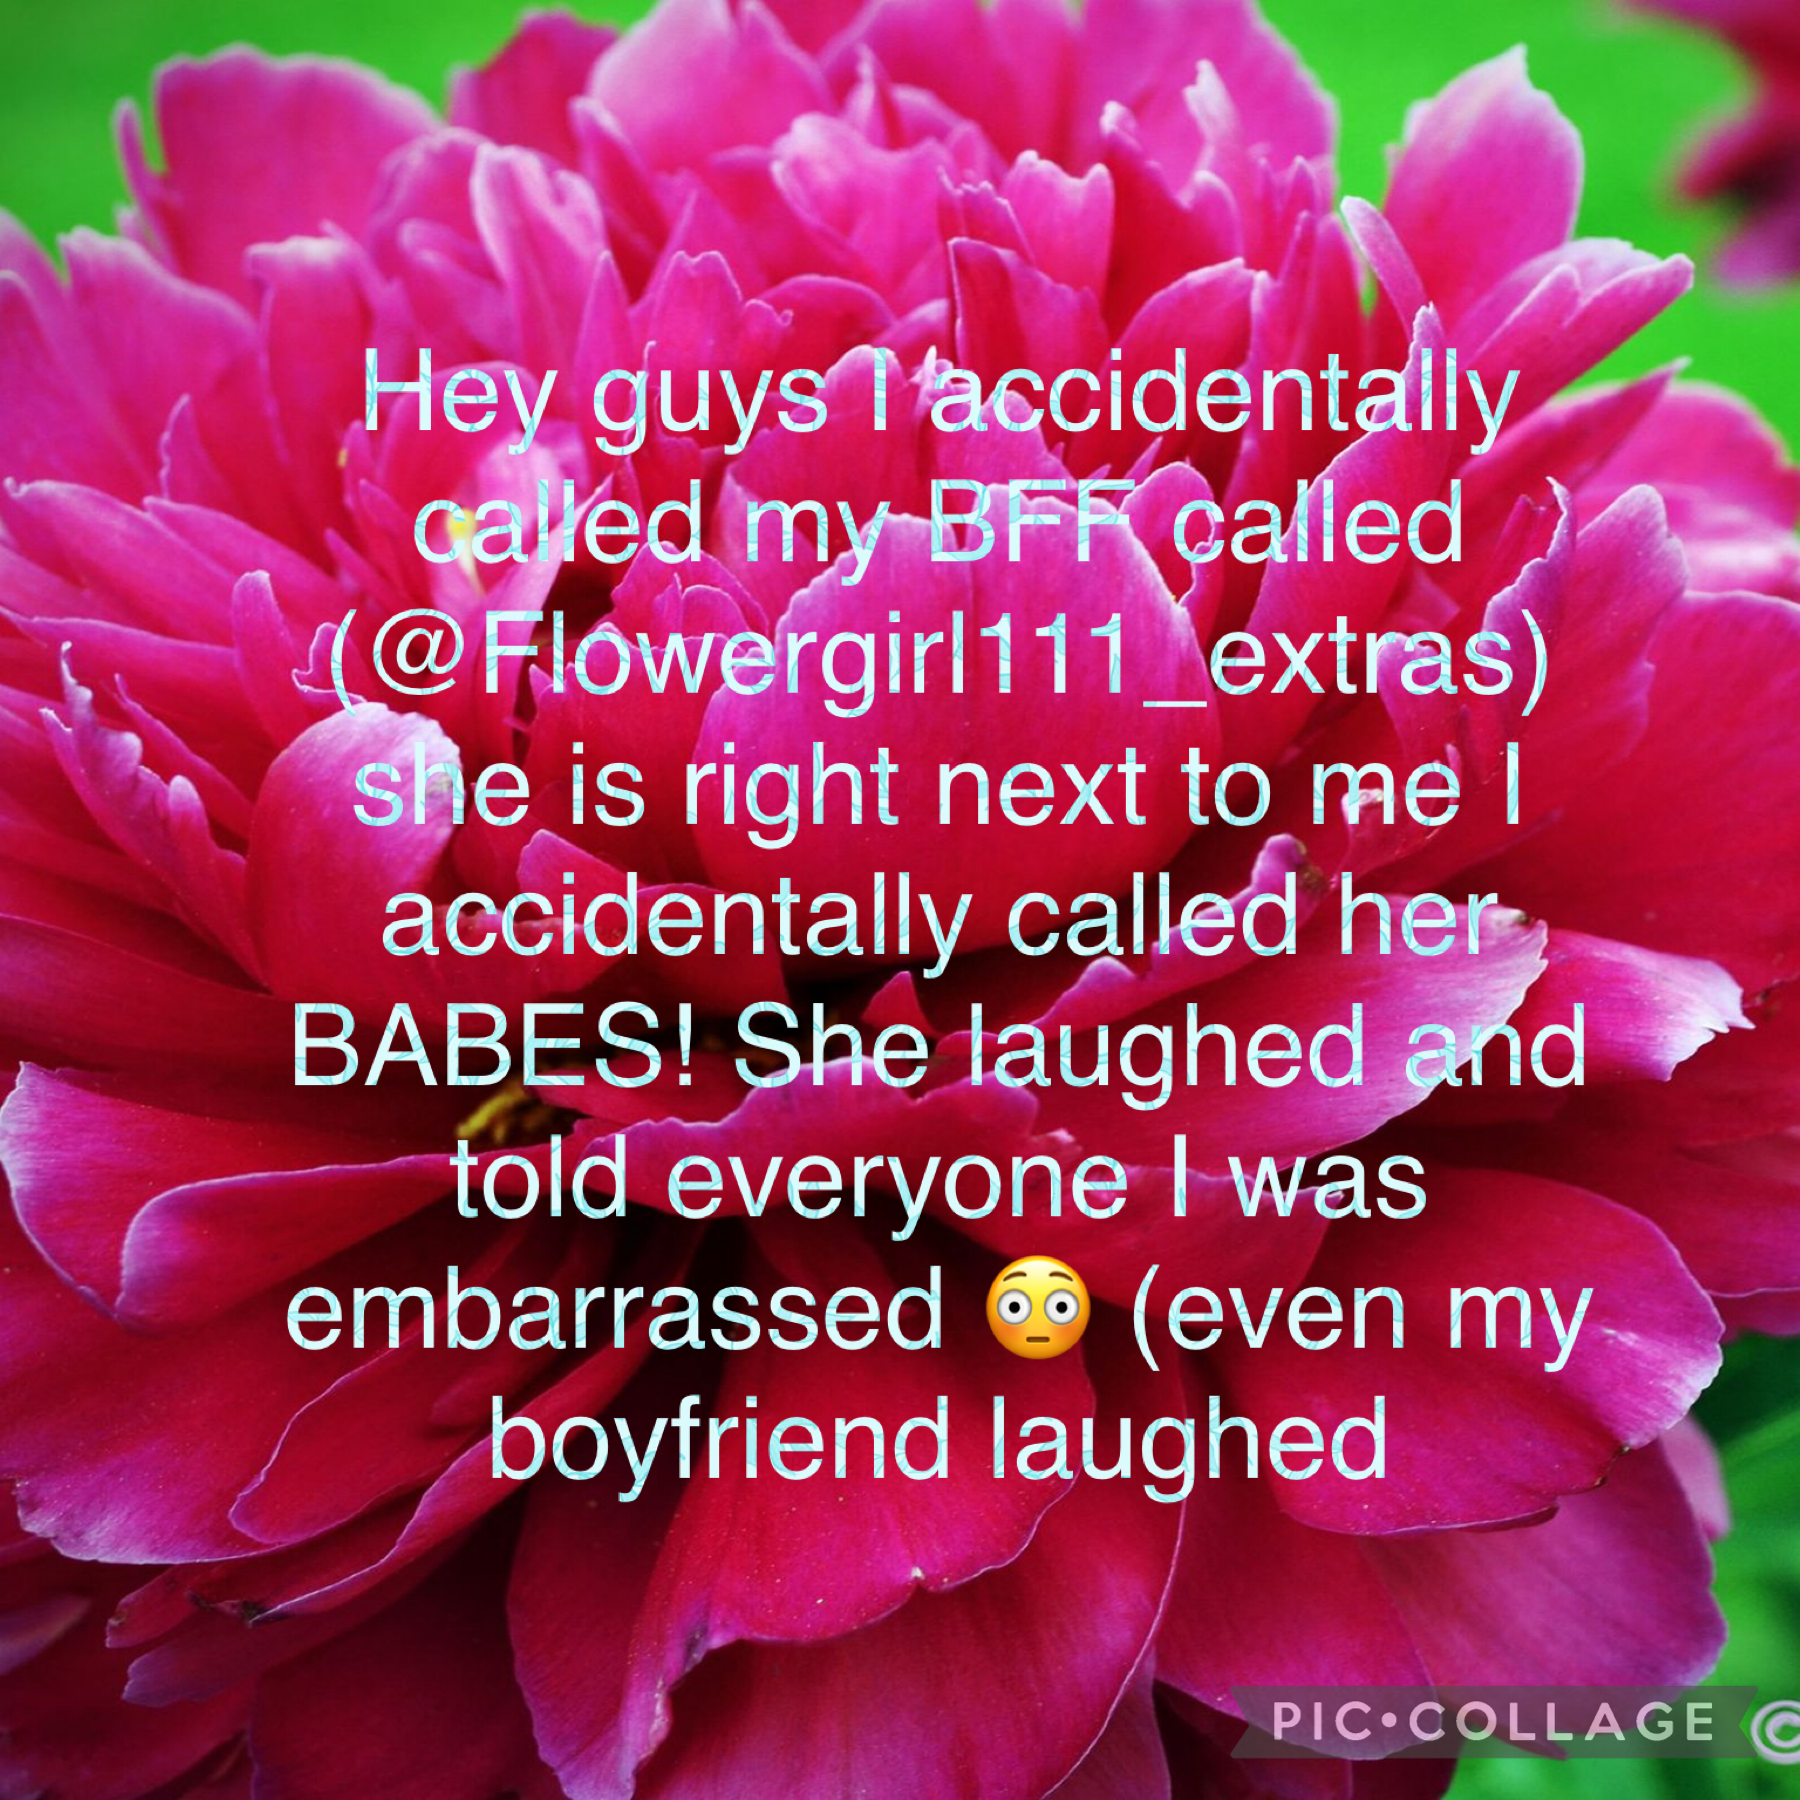 Sorry @Flowergirl111_extras 